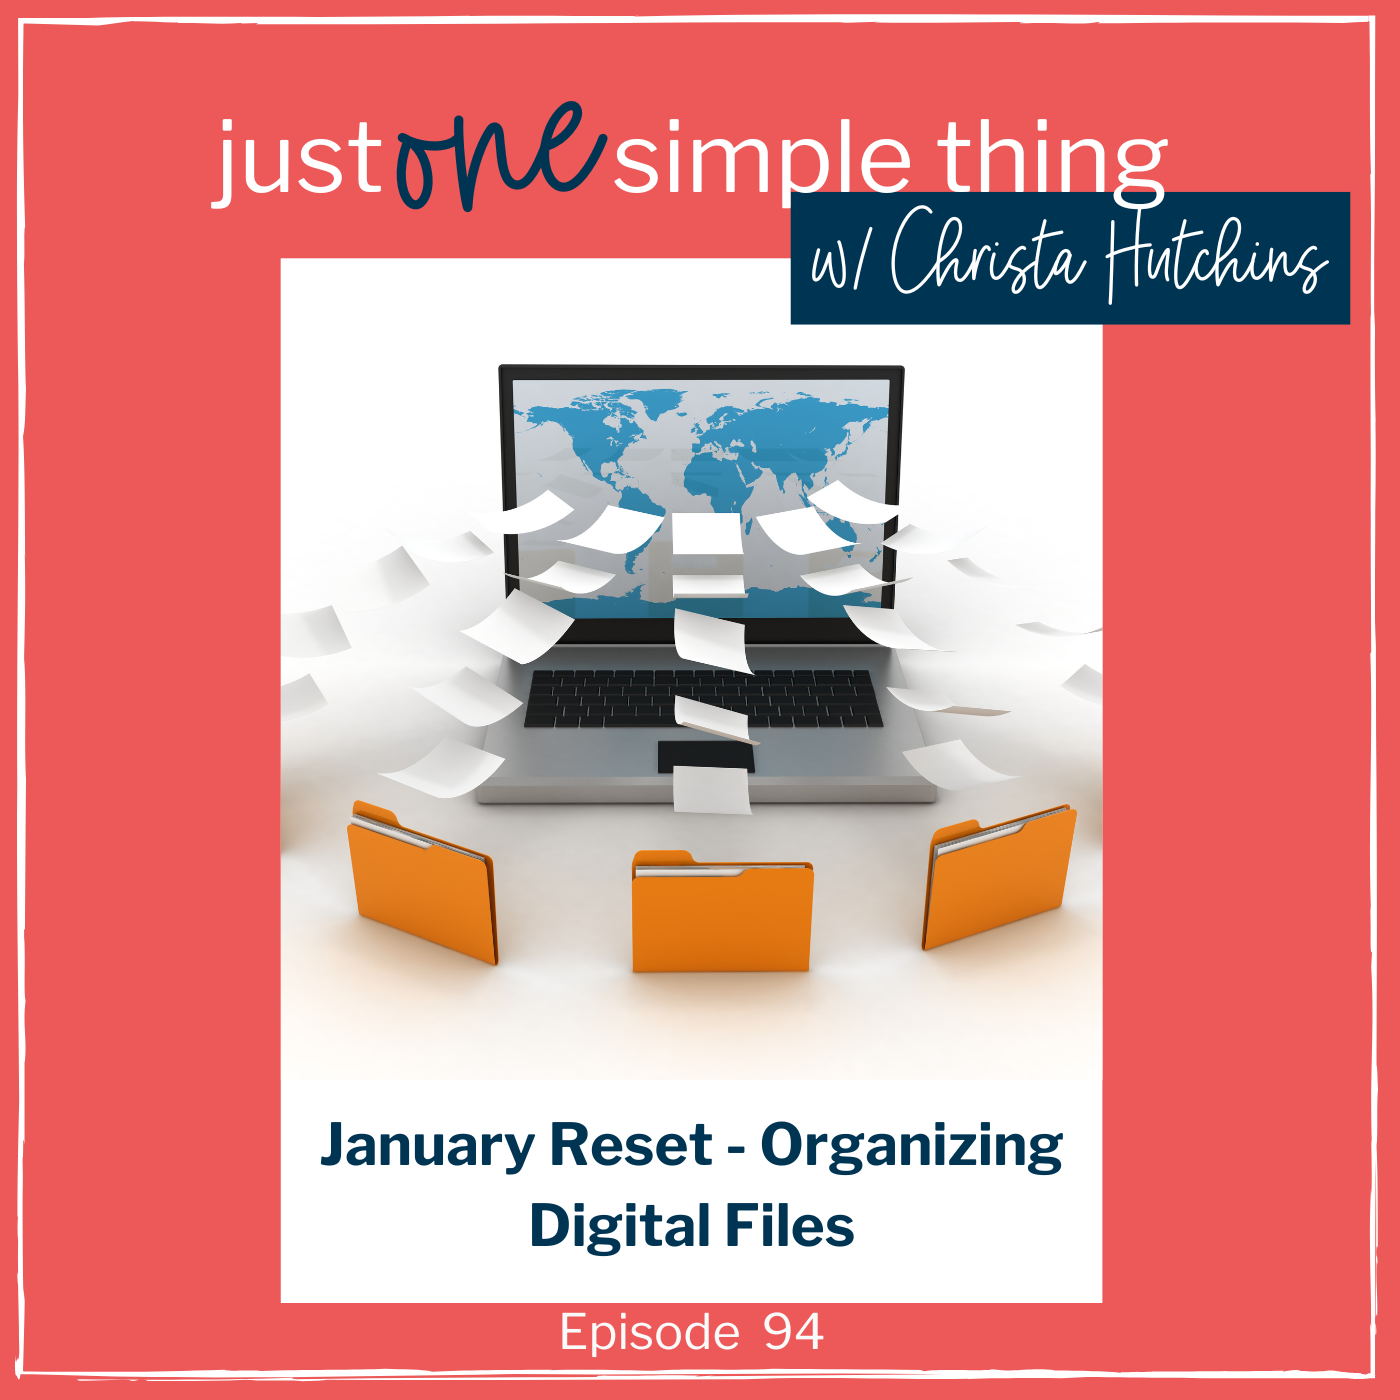 January Reset - Organizing Digital Files